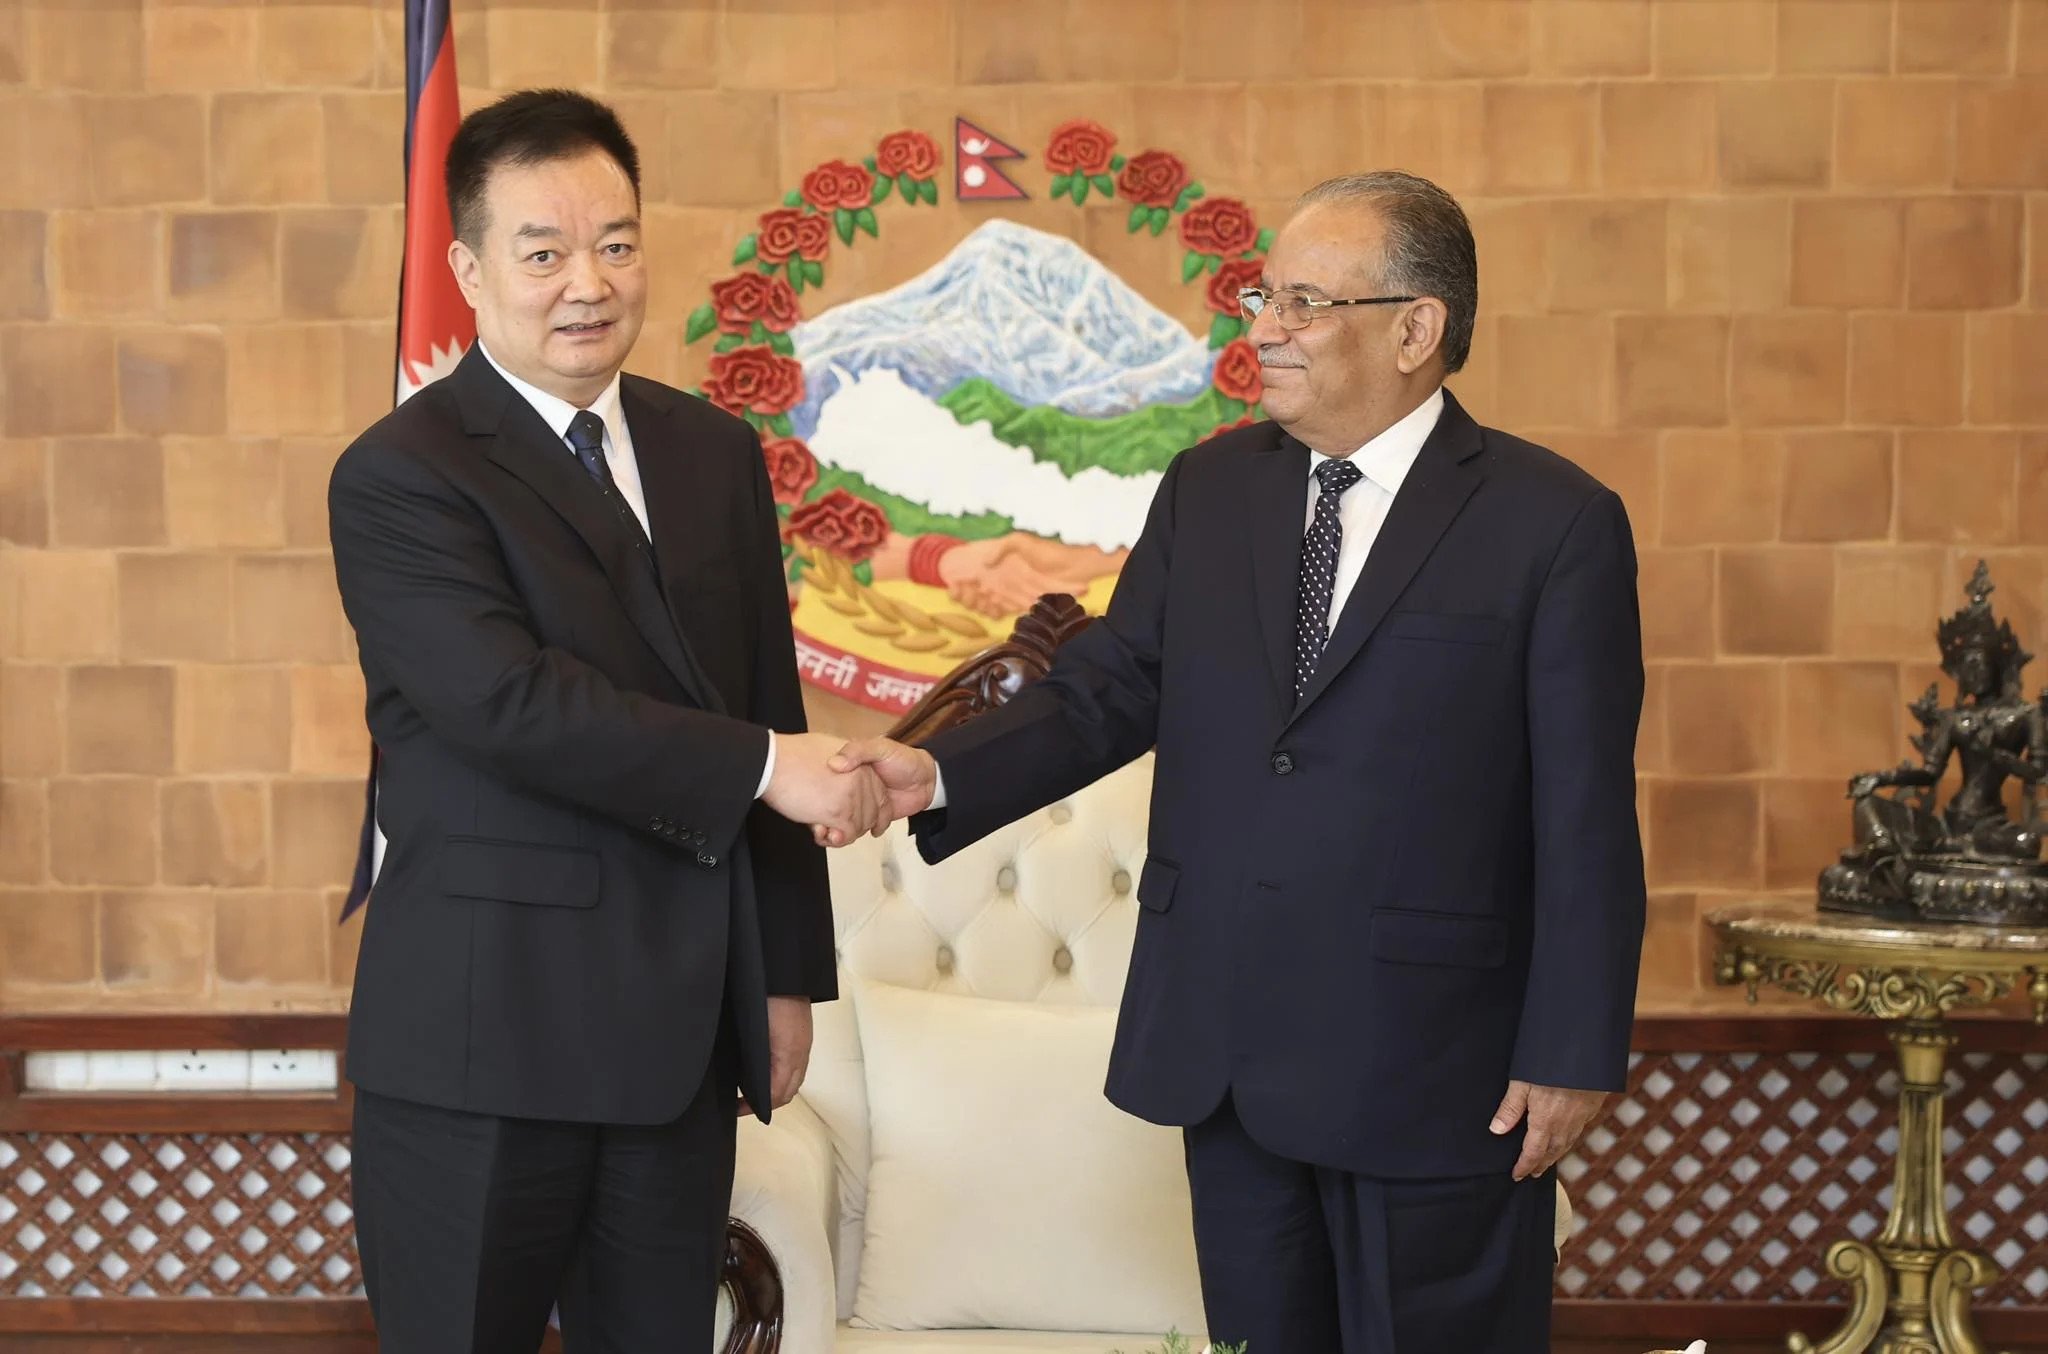 PM Dahal and CPC Tibet Secretary Wang meet